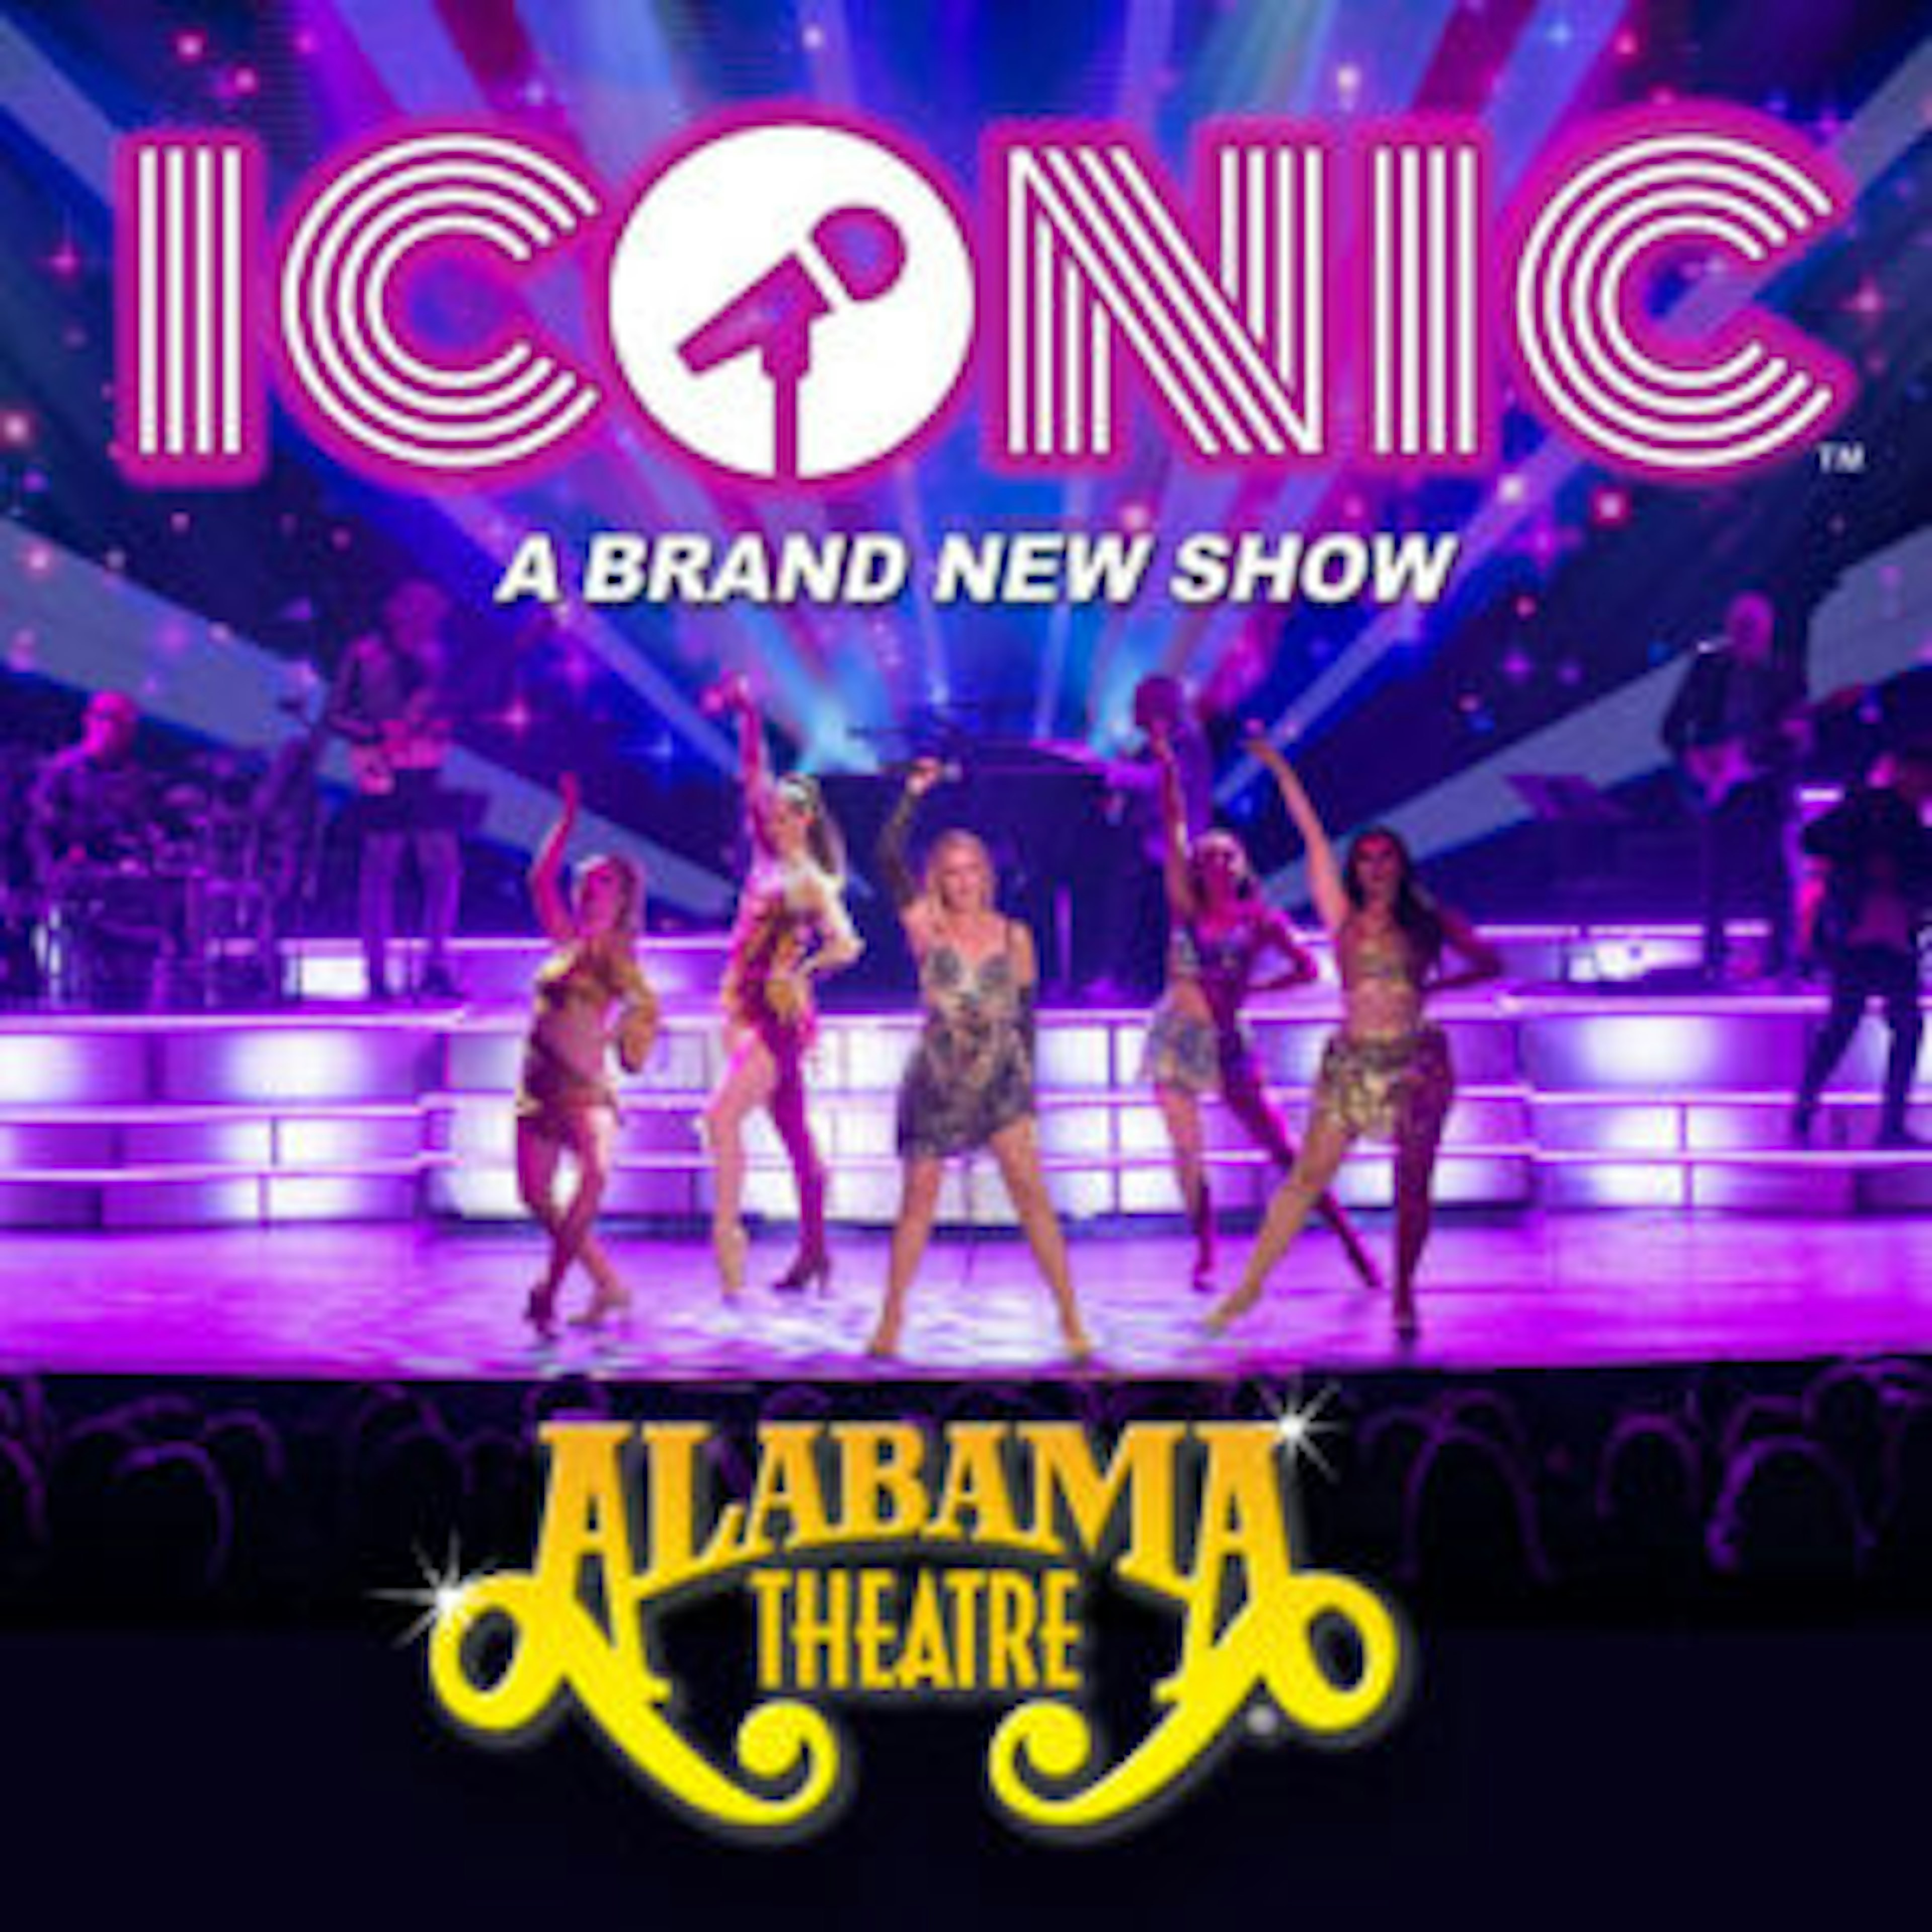 Alabama Theatre: ICONIC!